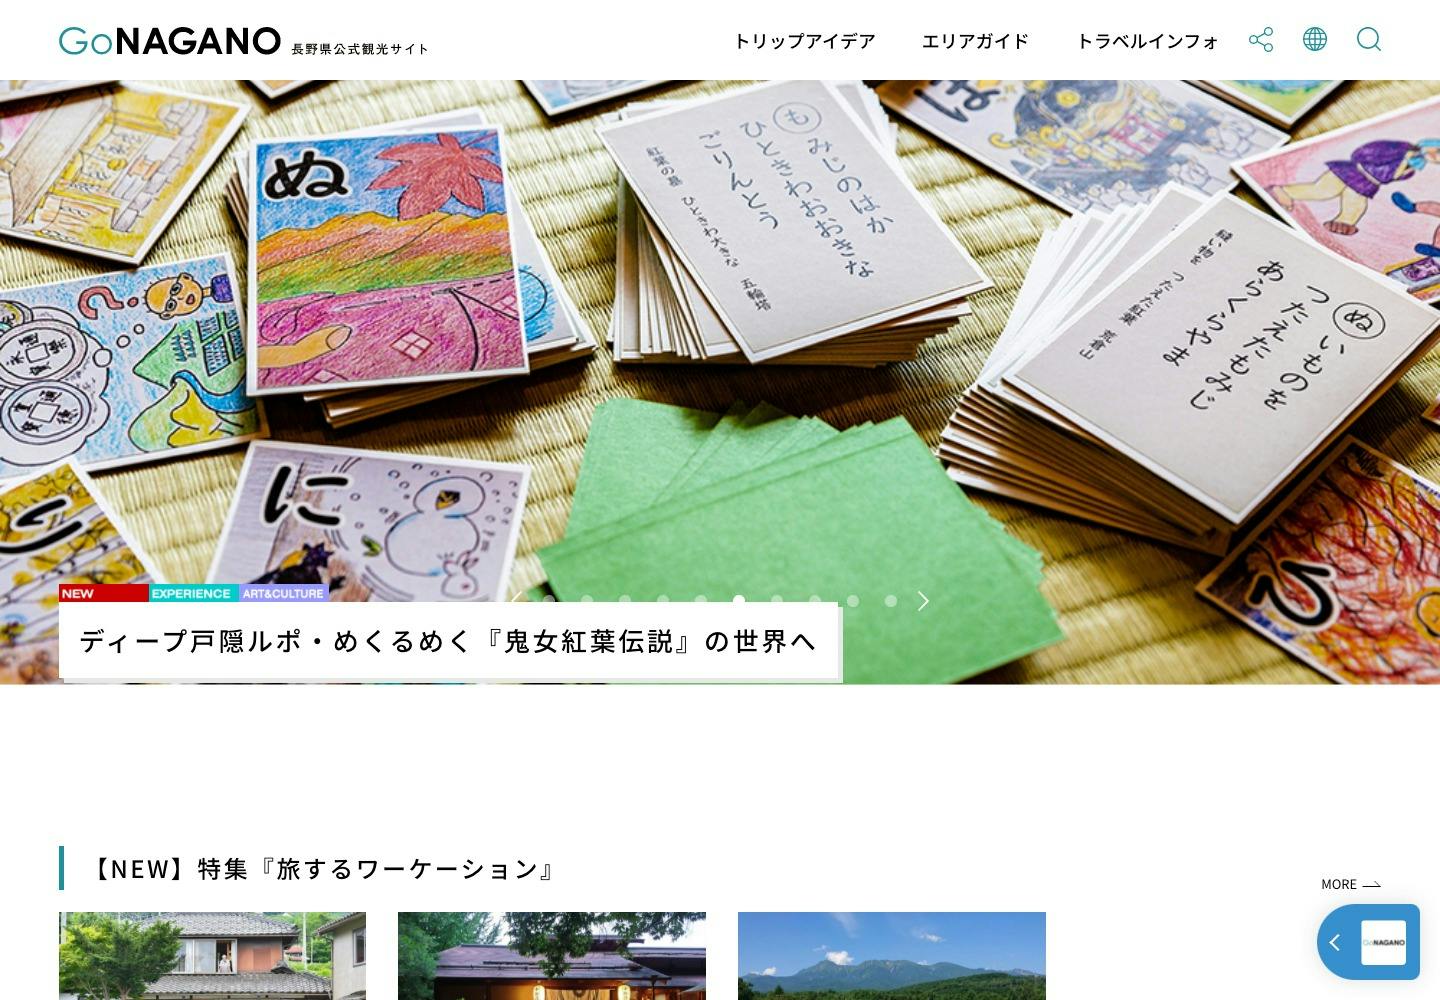 Cover Image for Go NAGANO 長野県公式観光サイト